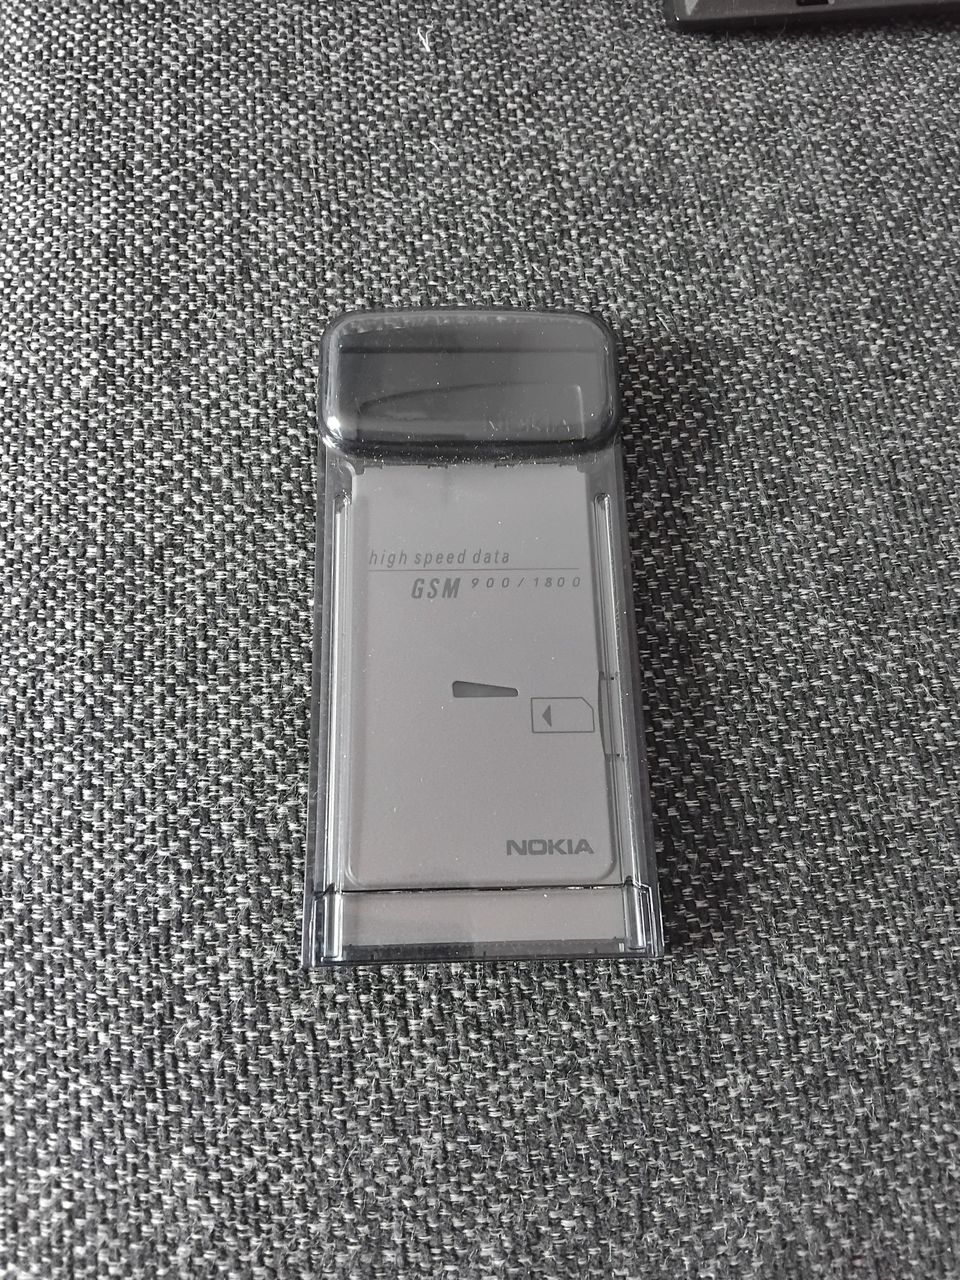 PCMCIA Nokia GSM Modeemi. PCMCIA Modem.